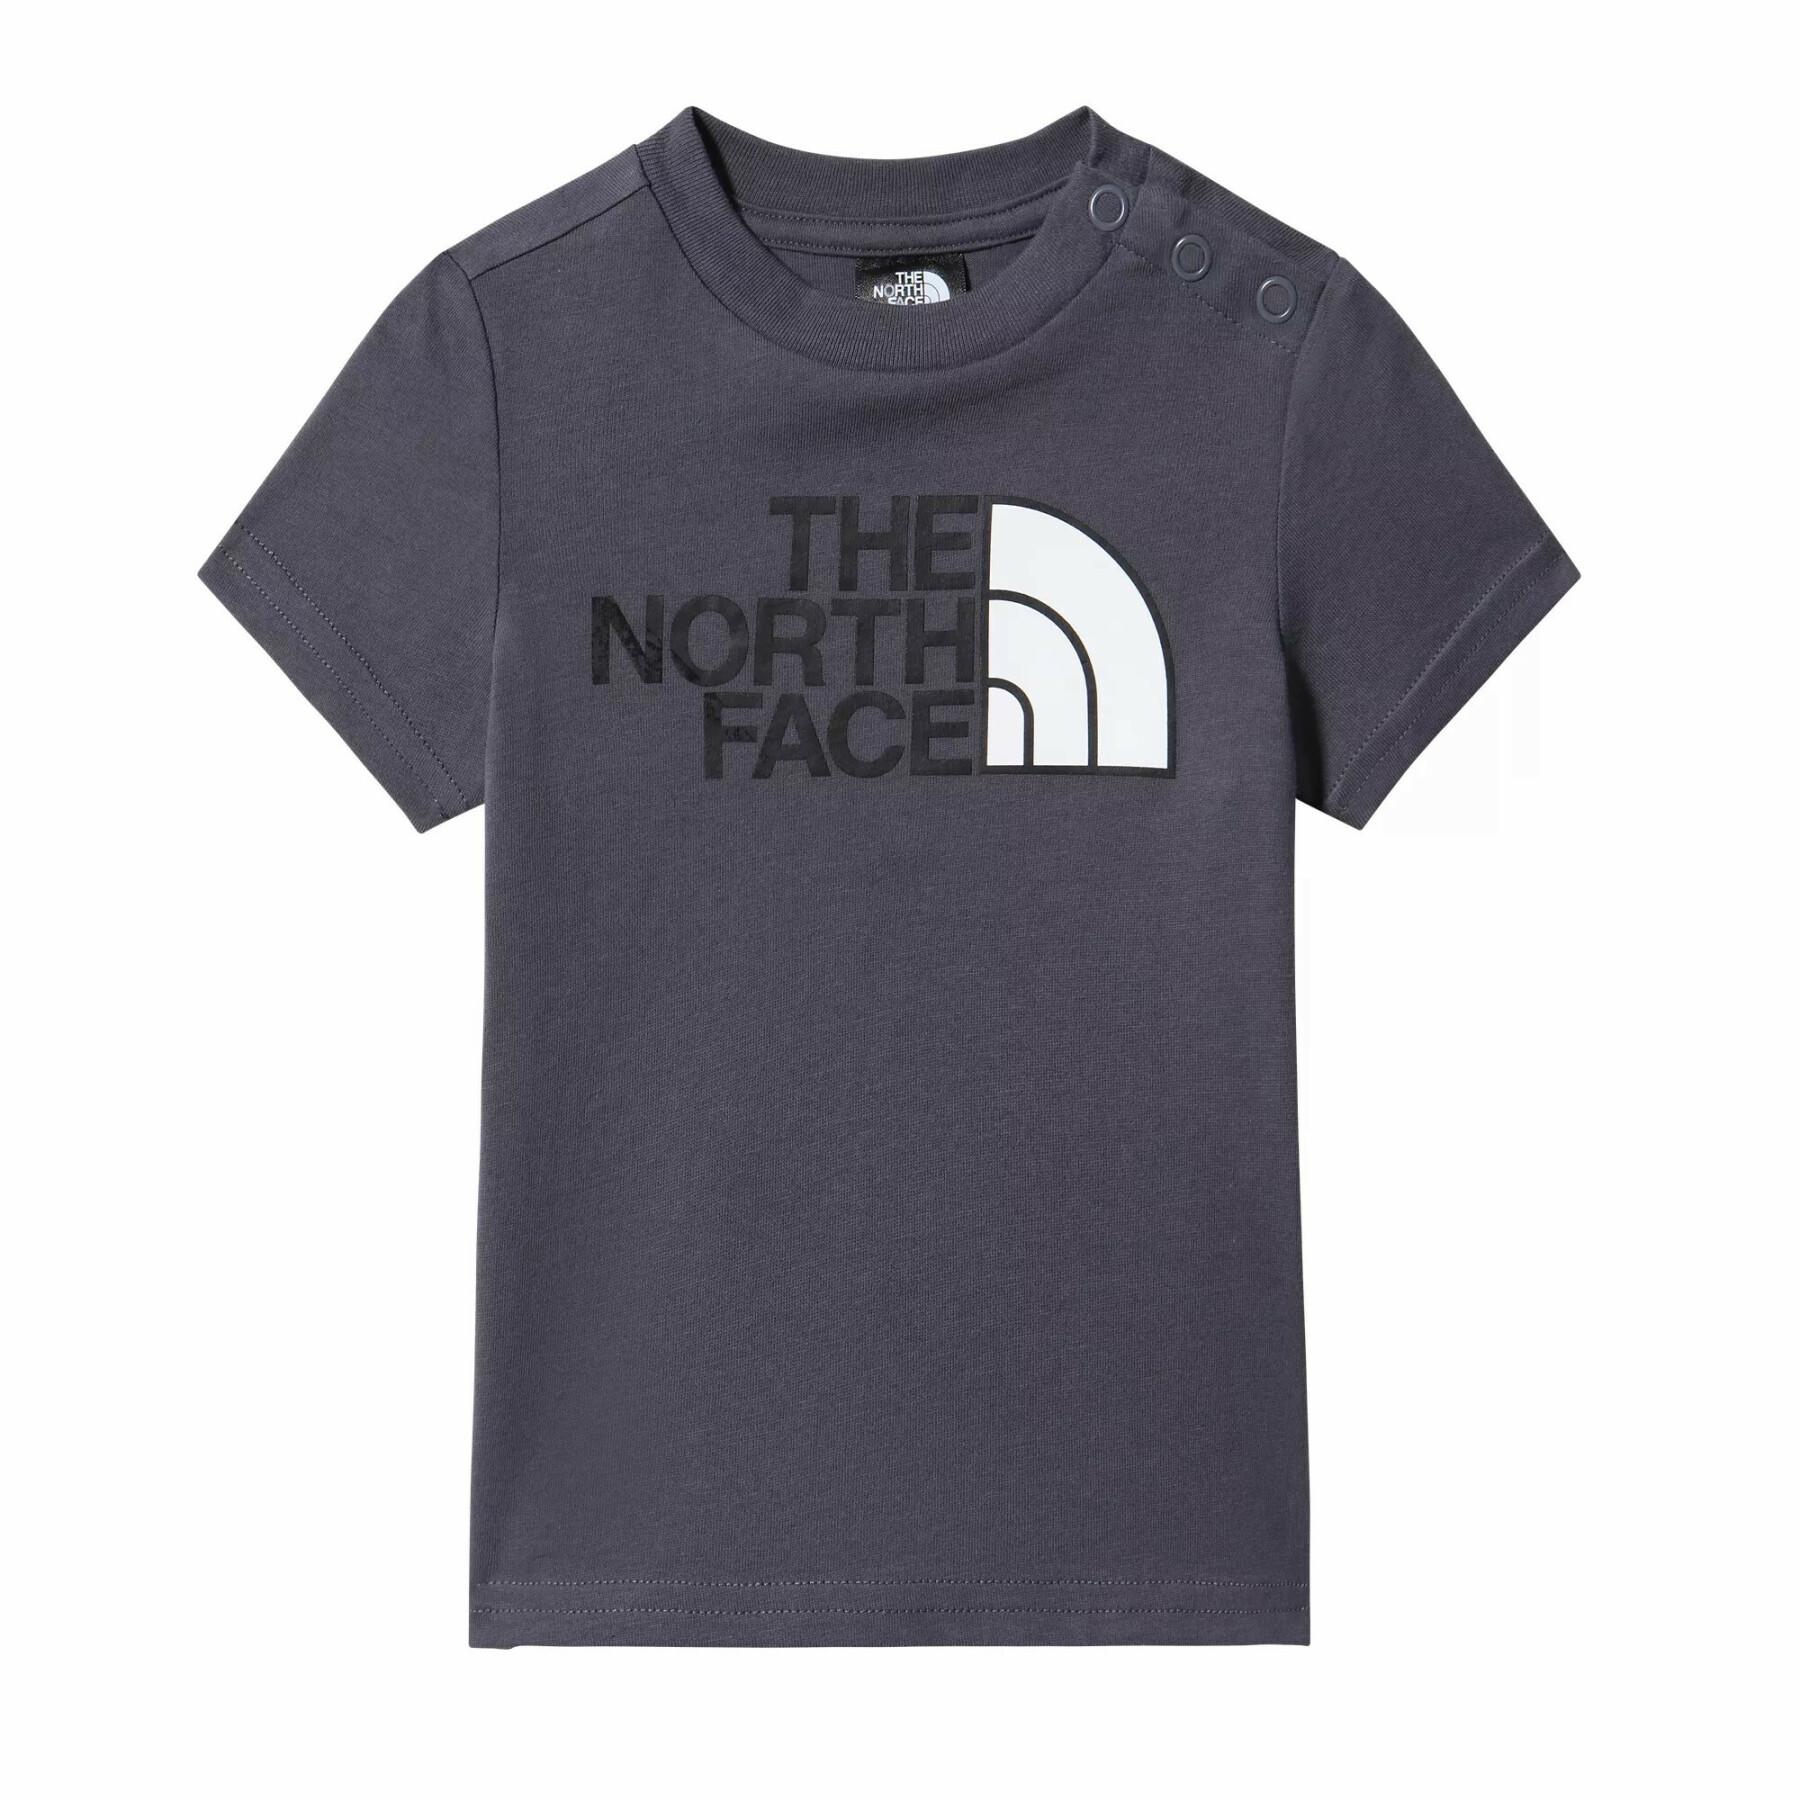 Camiseta do bebê The North Face Infant Graphic